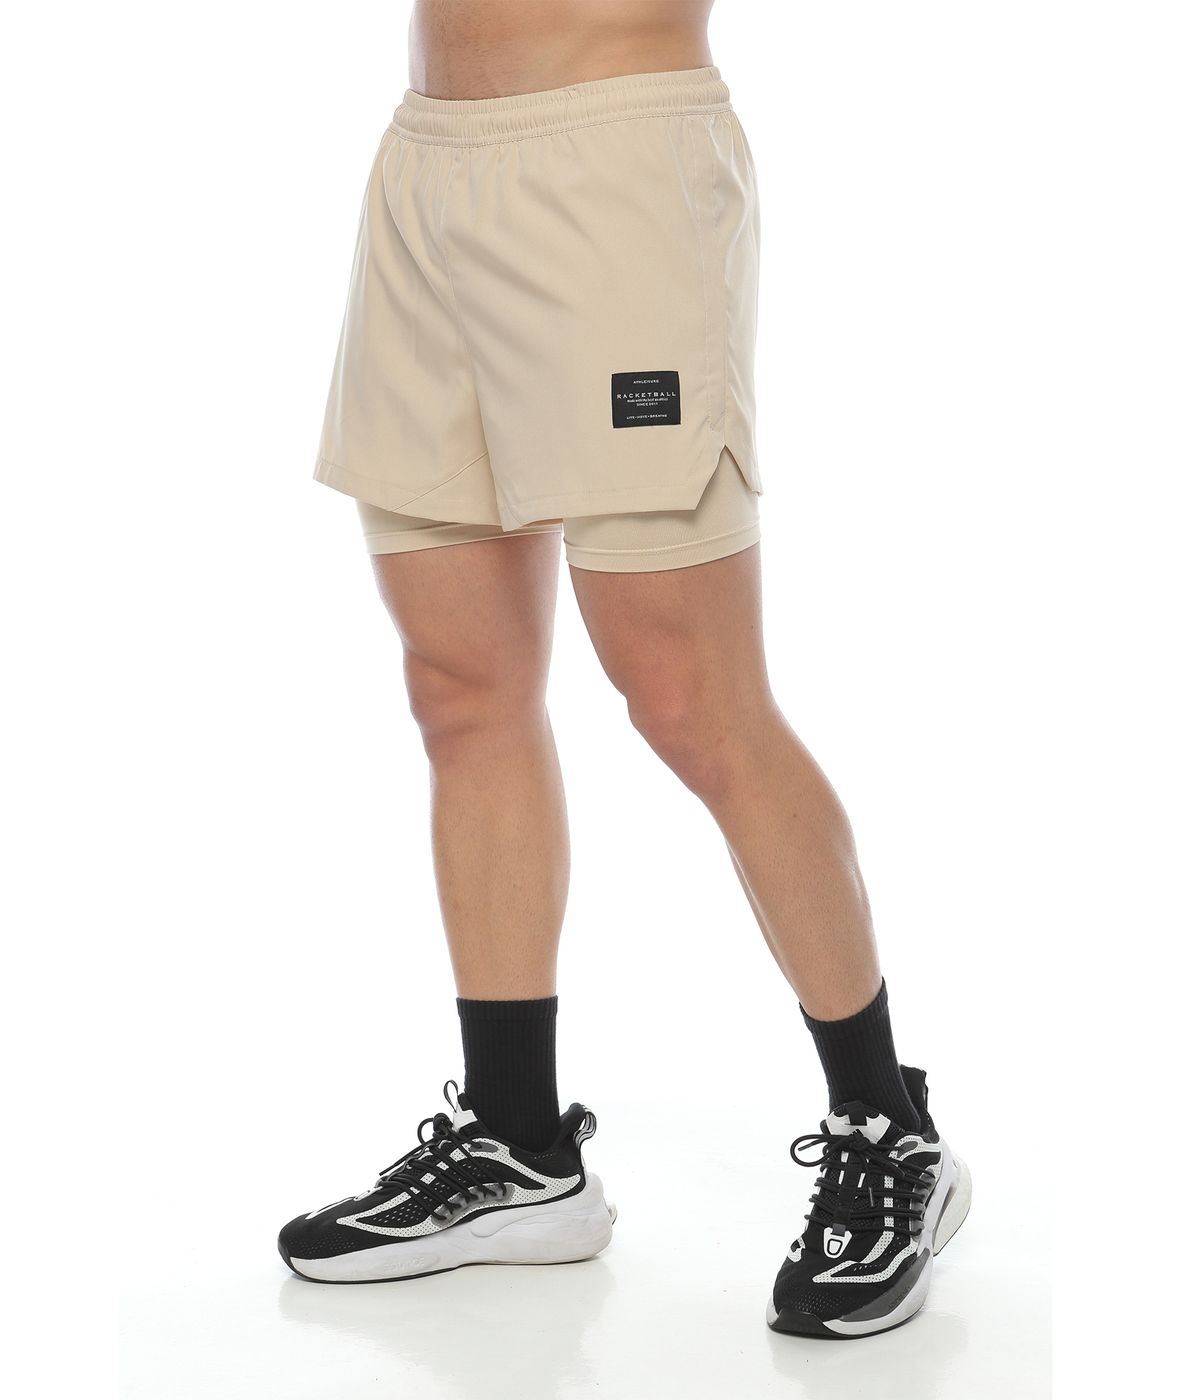 pantaloneta deportiva hombre, color arena - racketball movil